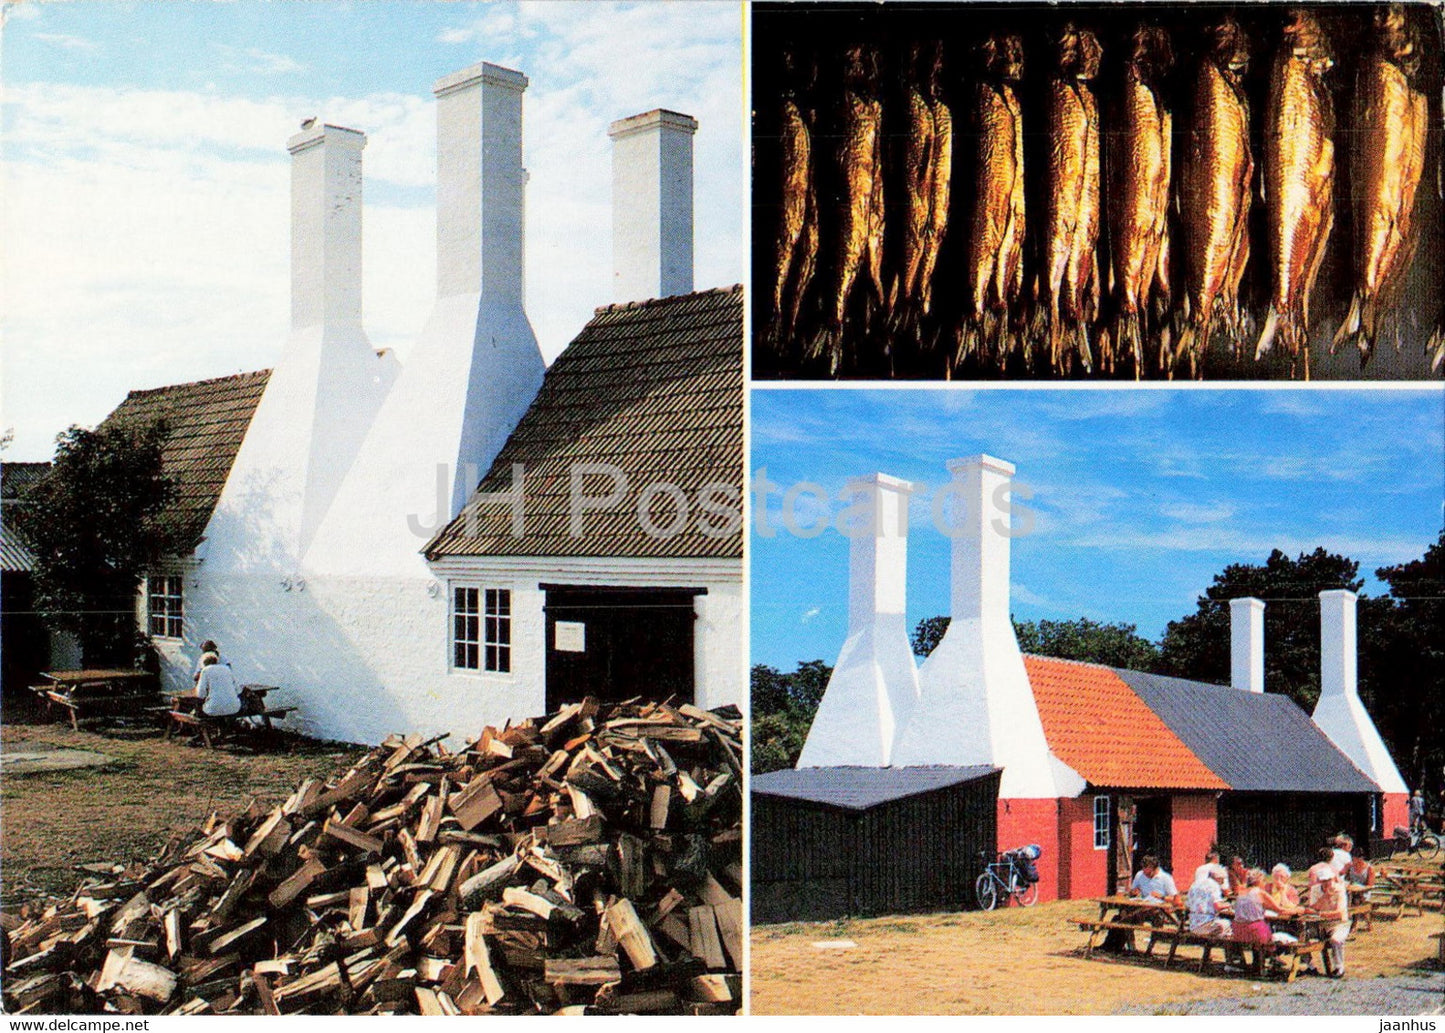 Bornholm - Hasle herring smokehouses - museum - 2004 - Denmark - used - JH Postcards